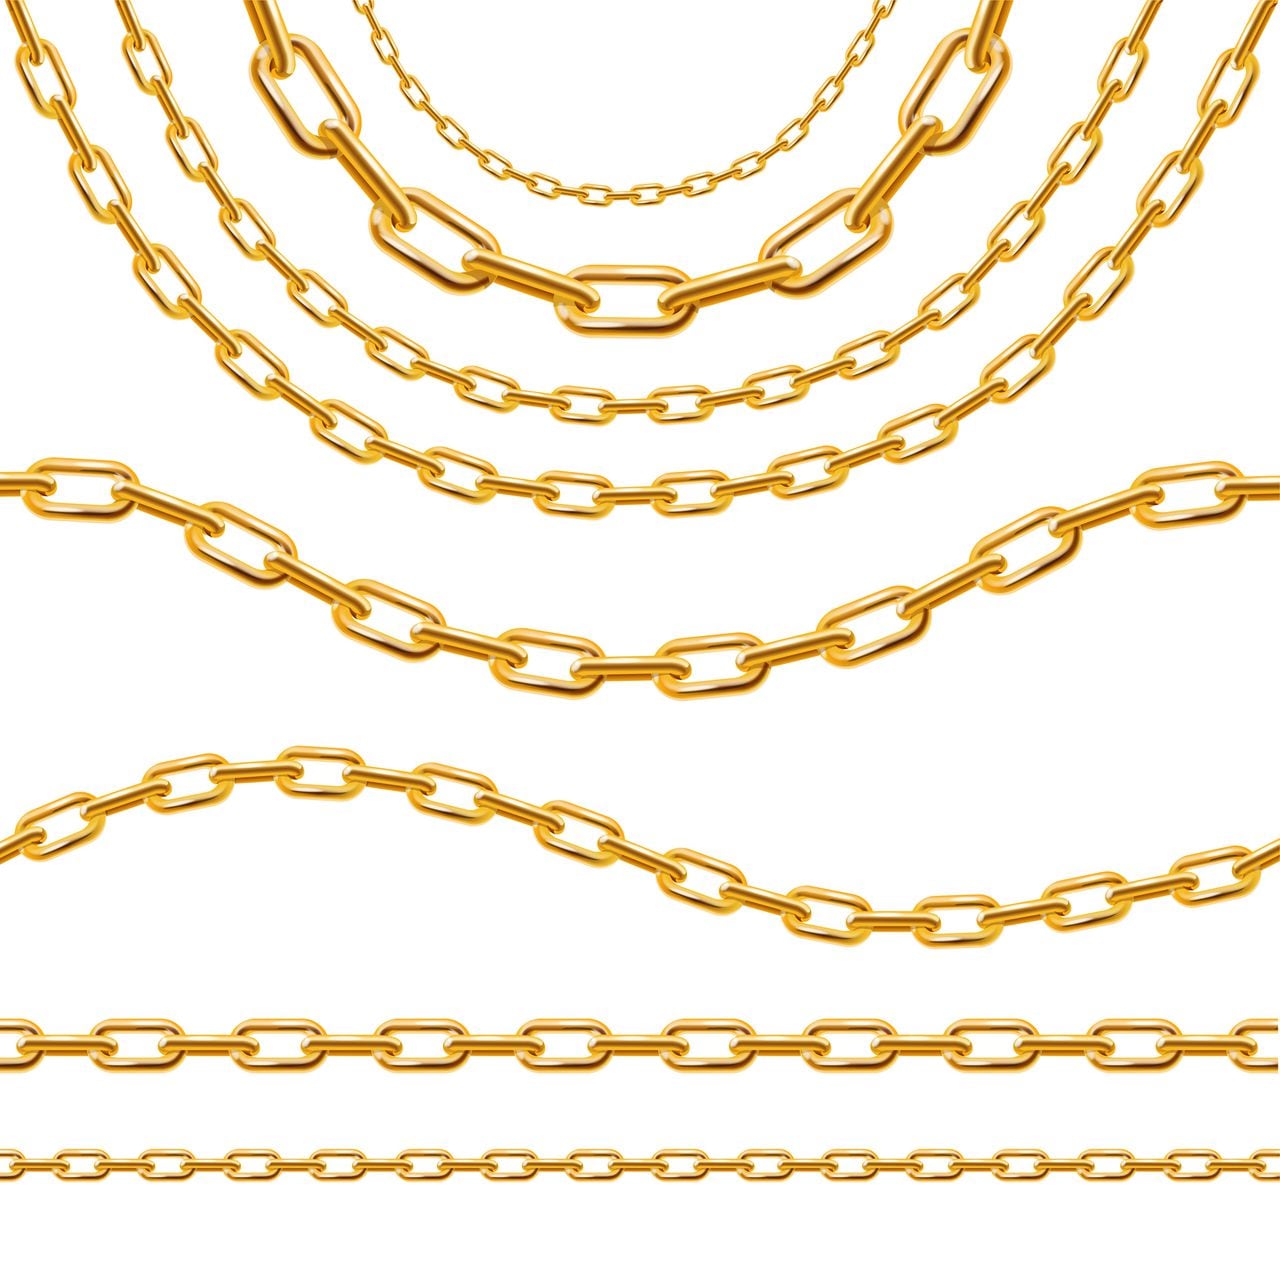 Realistic 3d Detailed Golden Chain Set Luxury Style Border or Frame Lines Types. Vector illustration of Framework